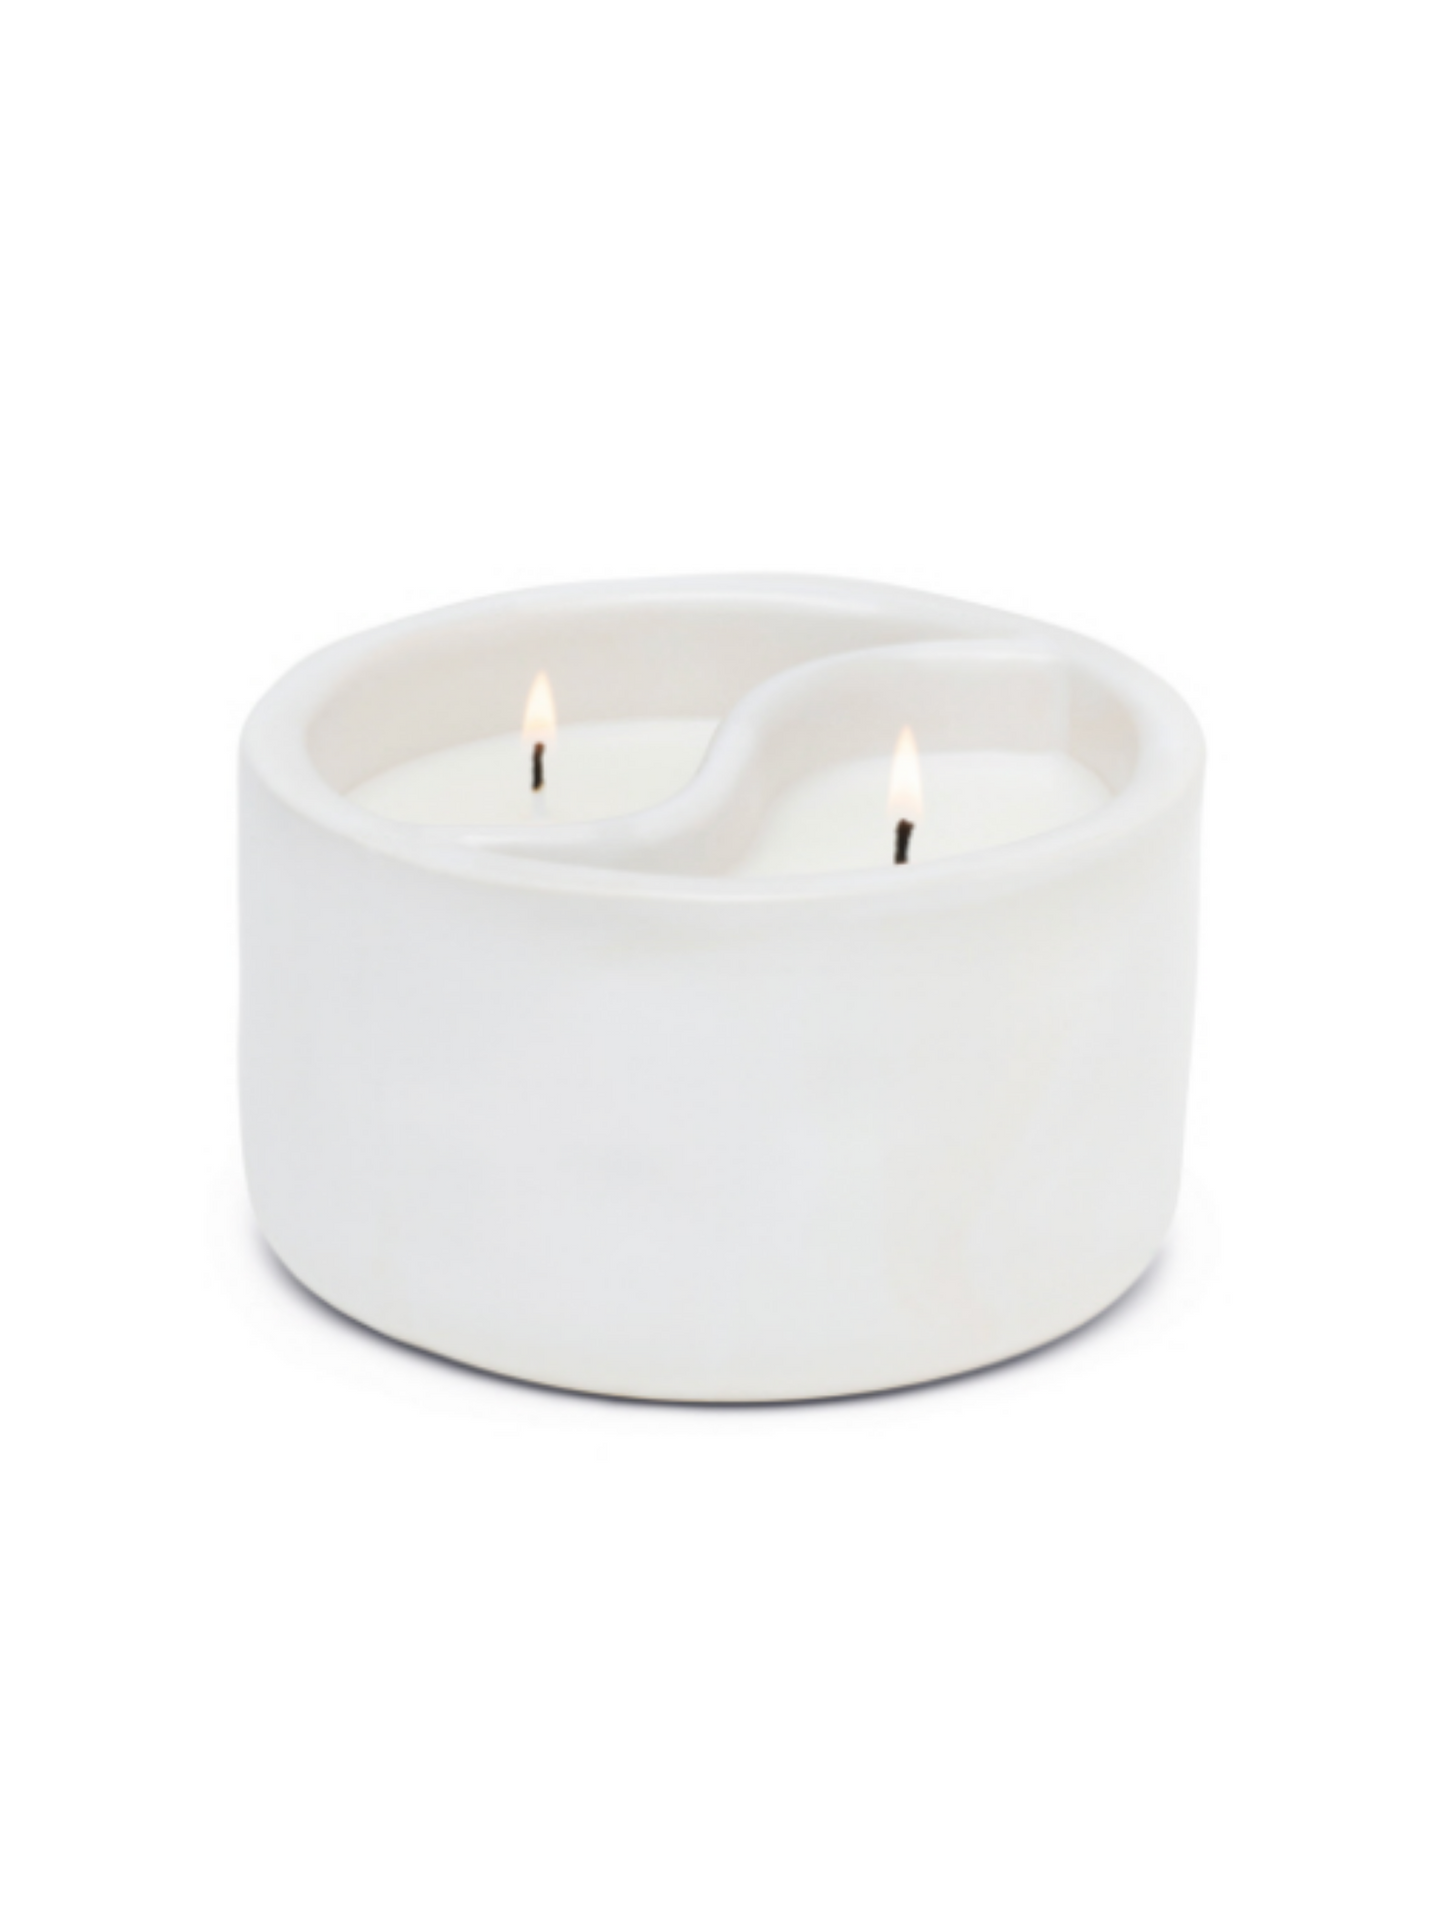 Ying Yang 11oz White Ceramic Candle